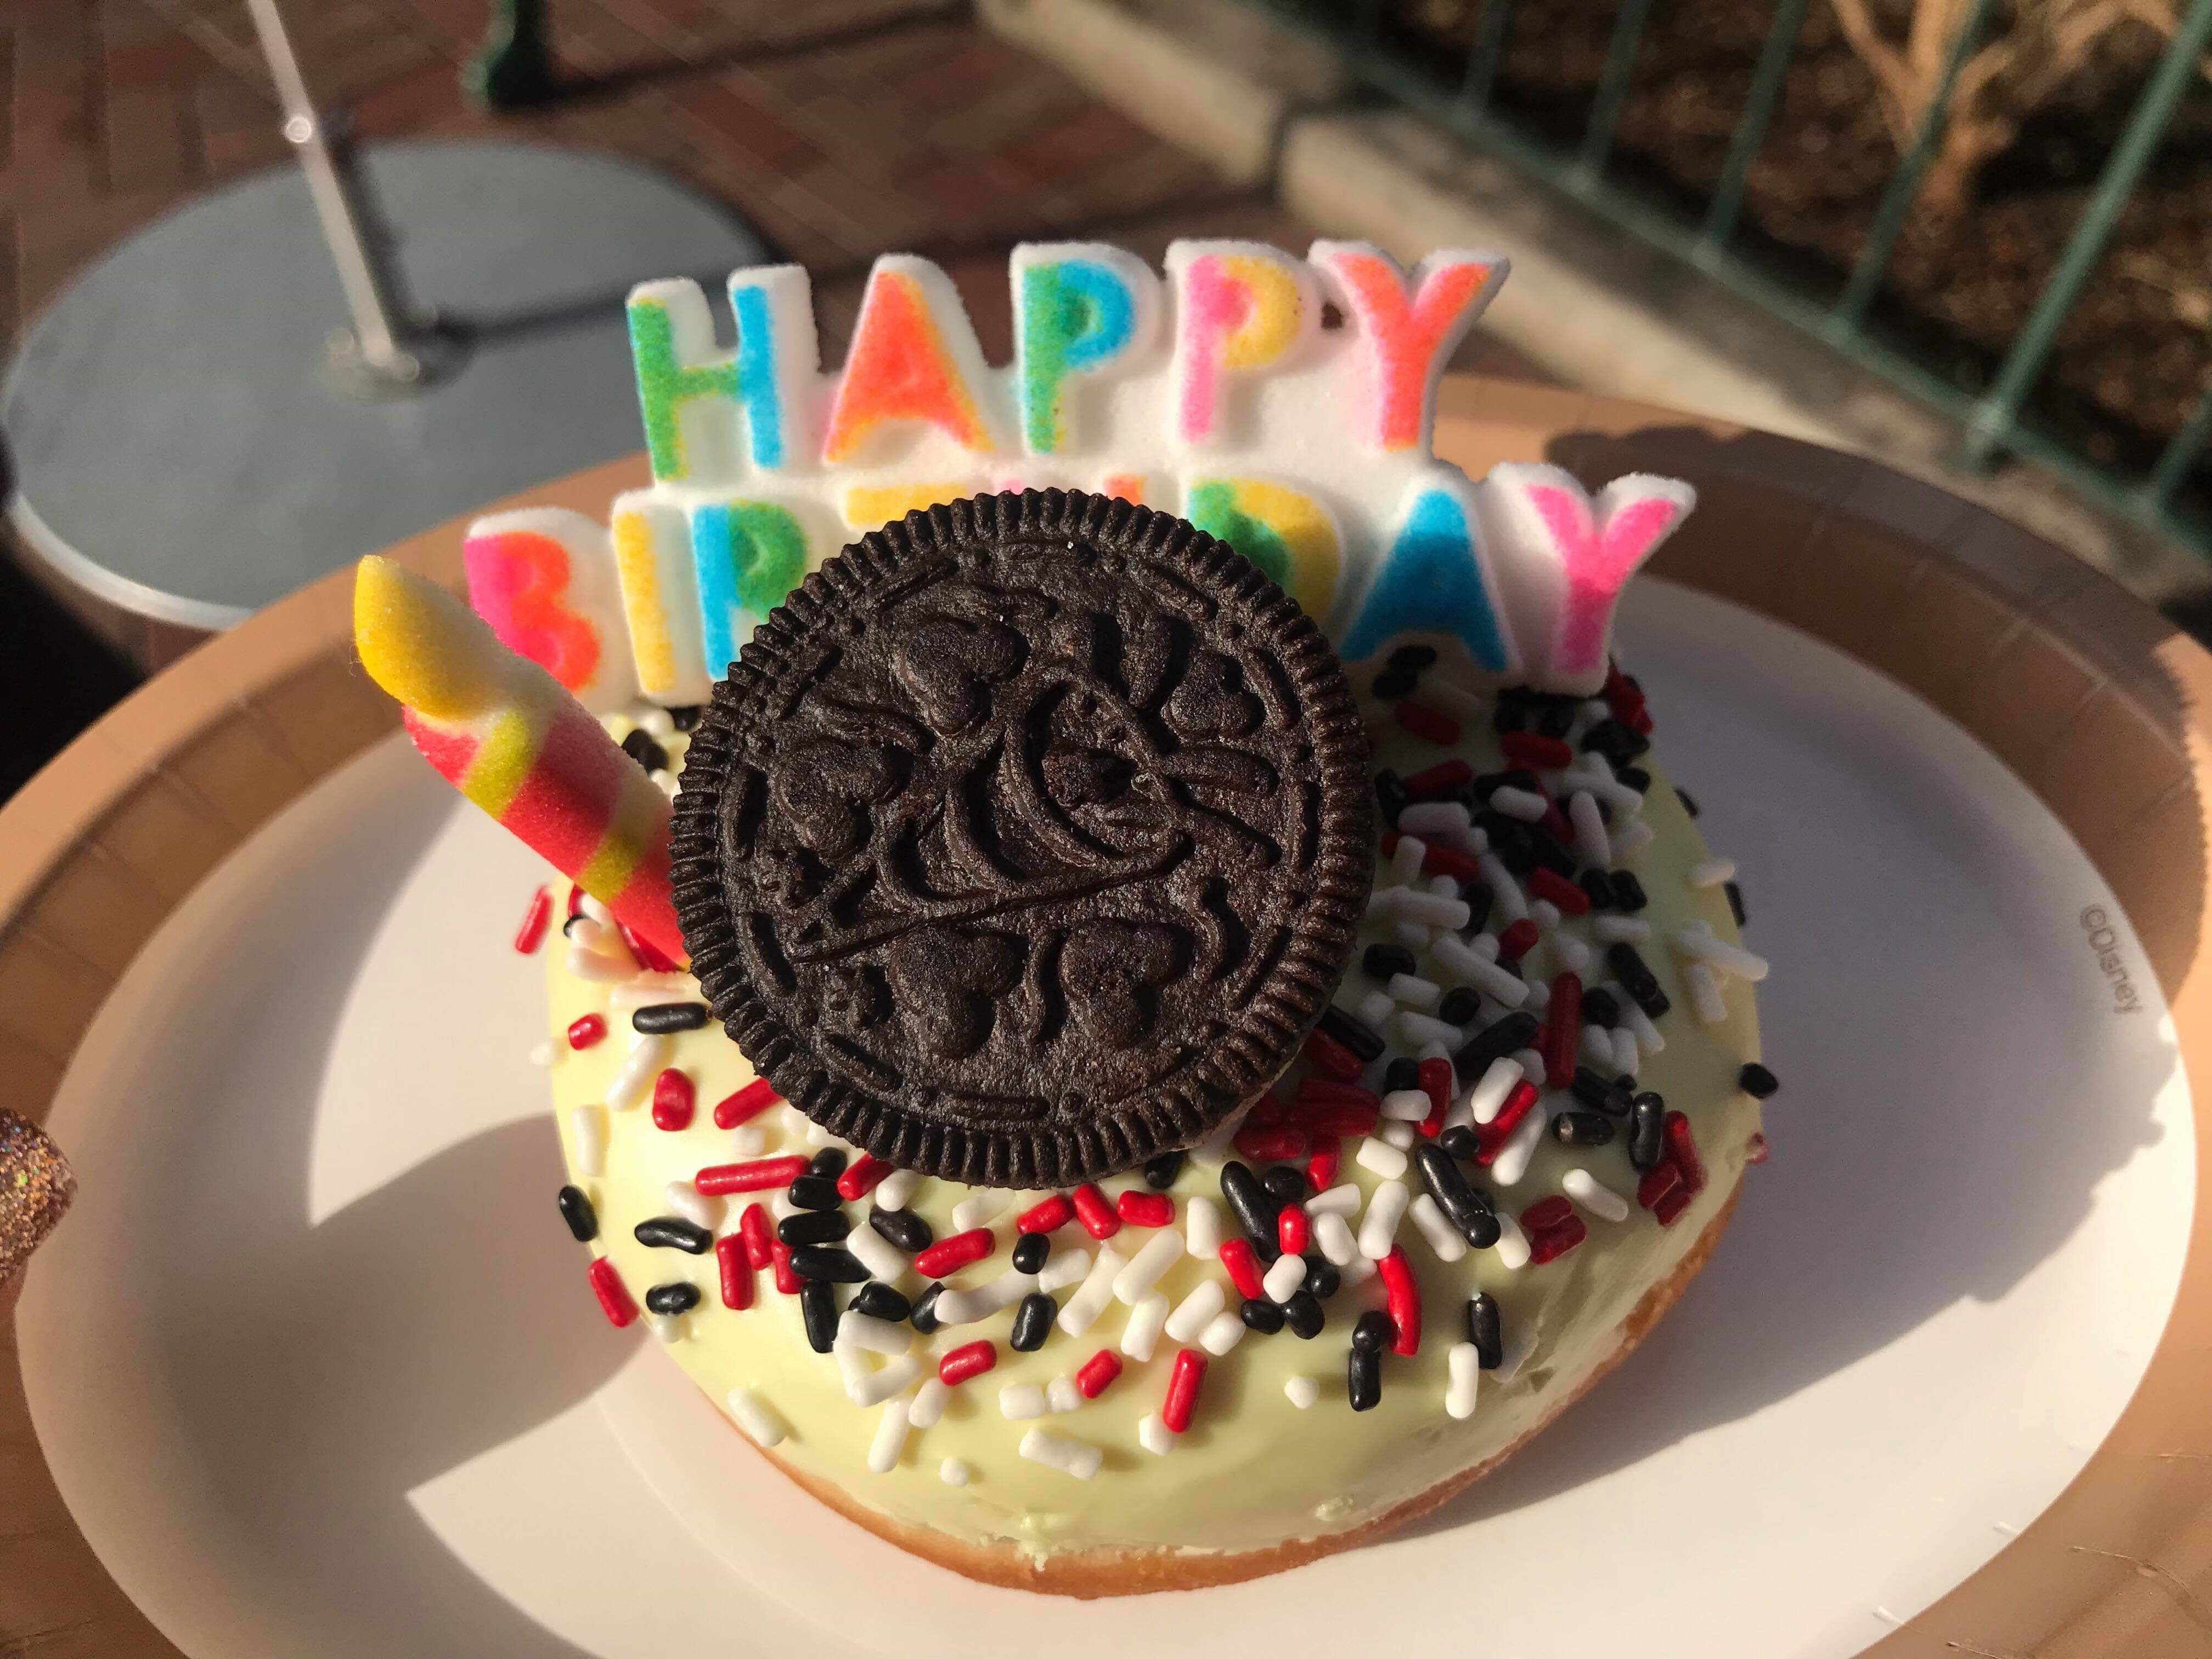 Check Out Mickeys Birthday Donut at Disneyland